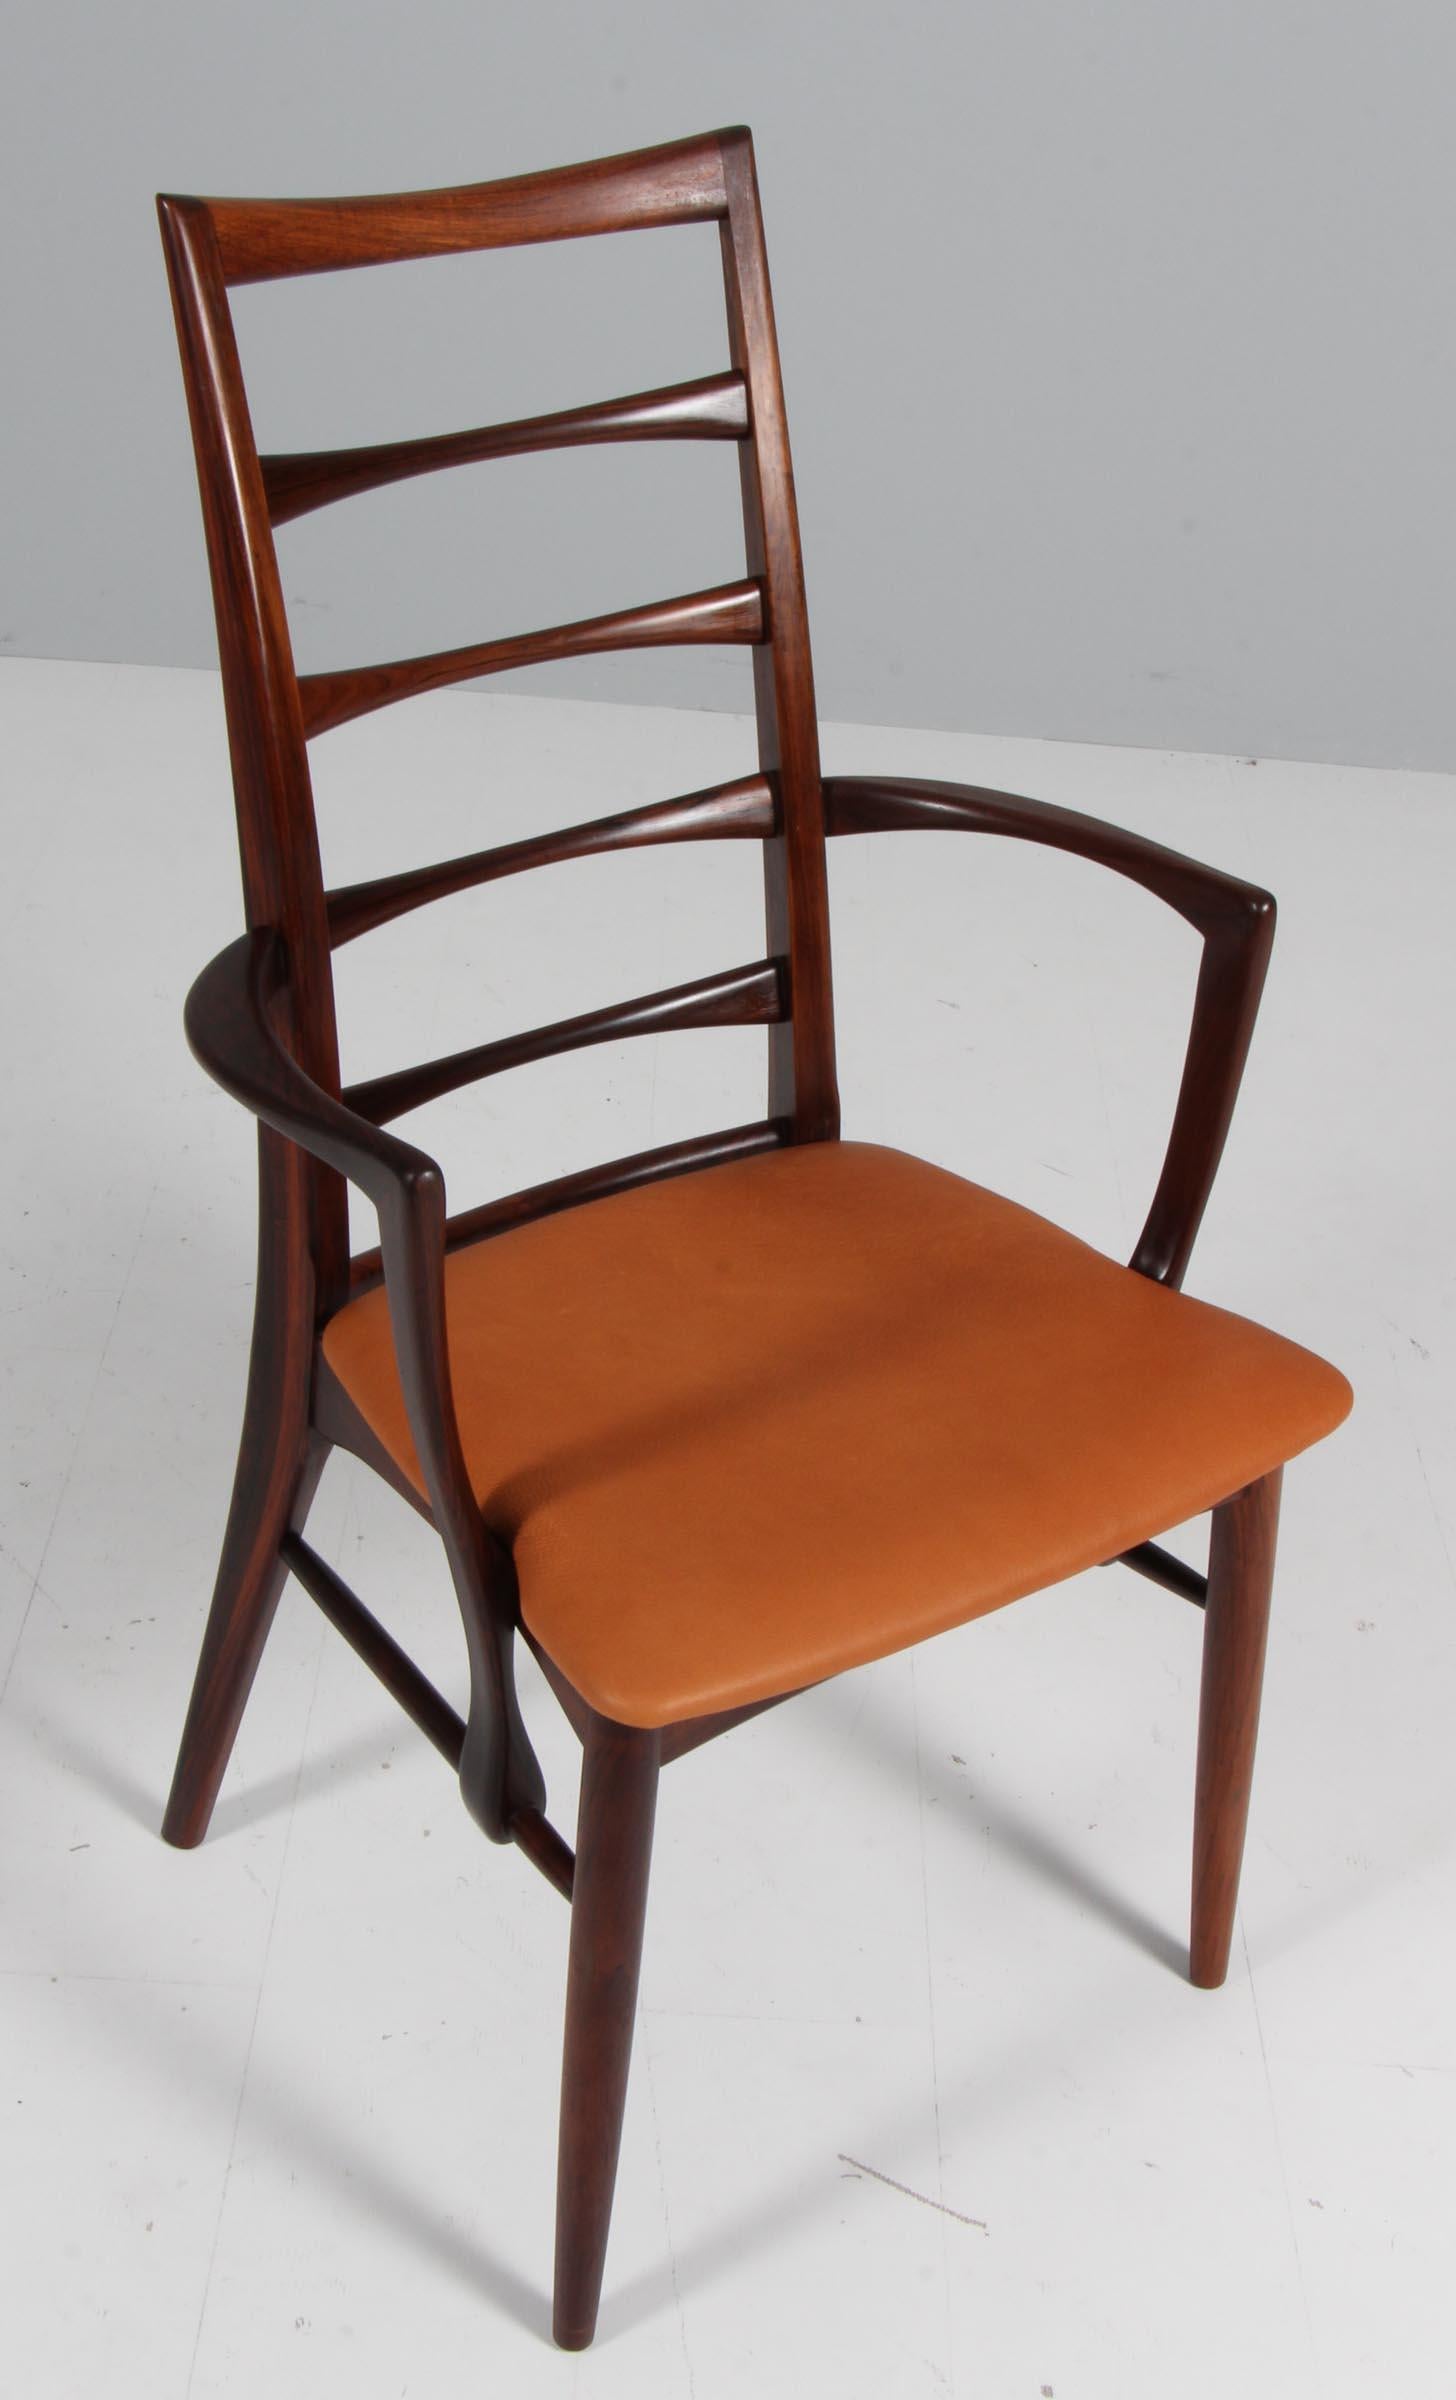 Niels Koefoed armchair made in solid rosewood.

New upholstered in vintage tan aniline leather.

Model Lis, made by Niels Koefoeds Møbelfabrik Hornslet, 1960s.

